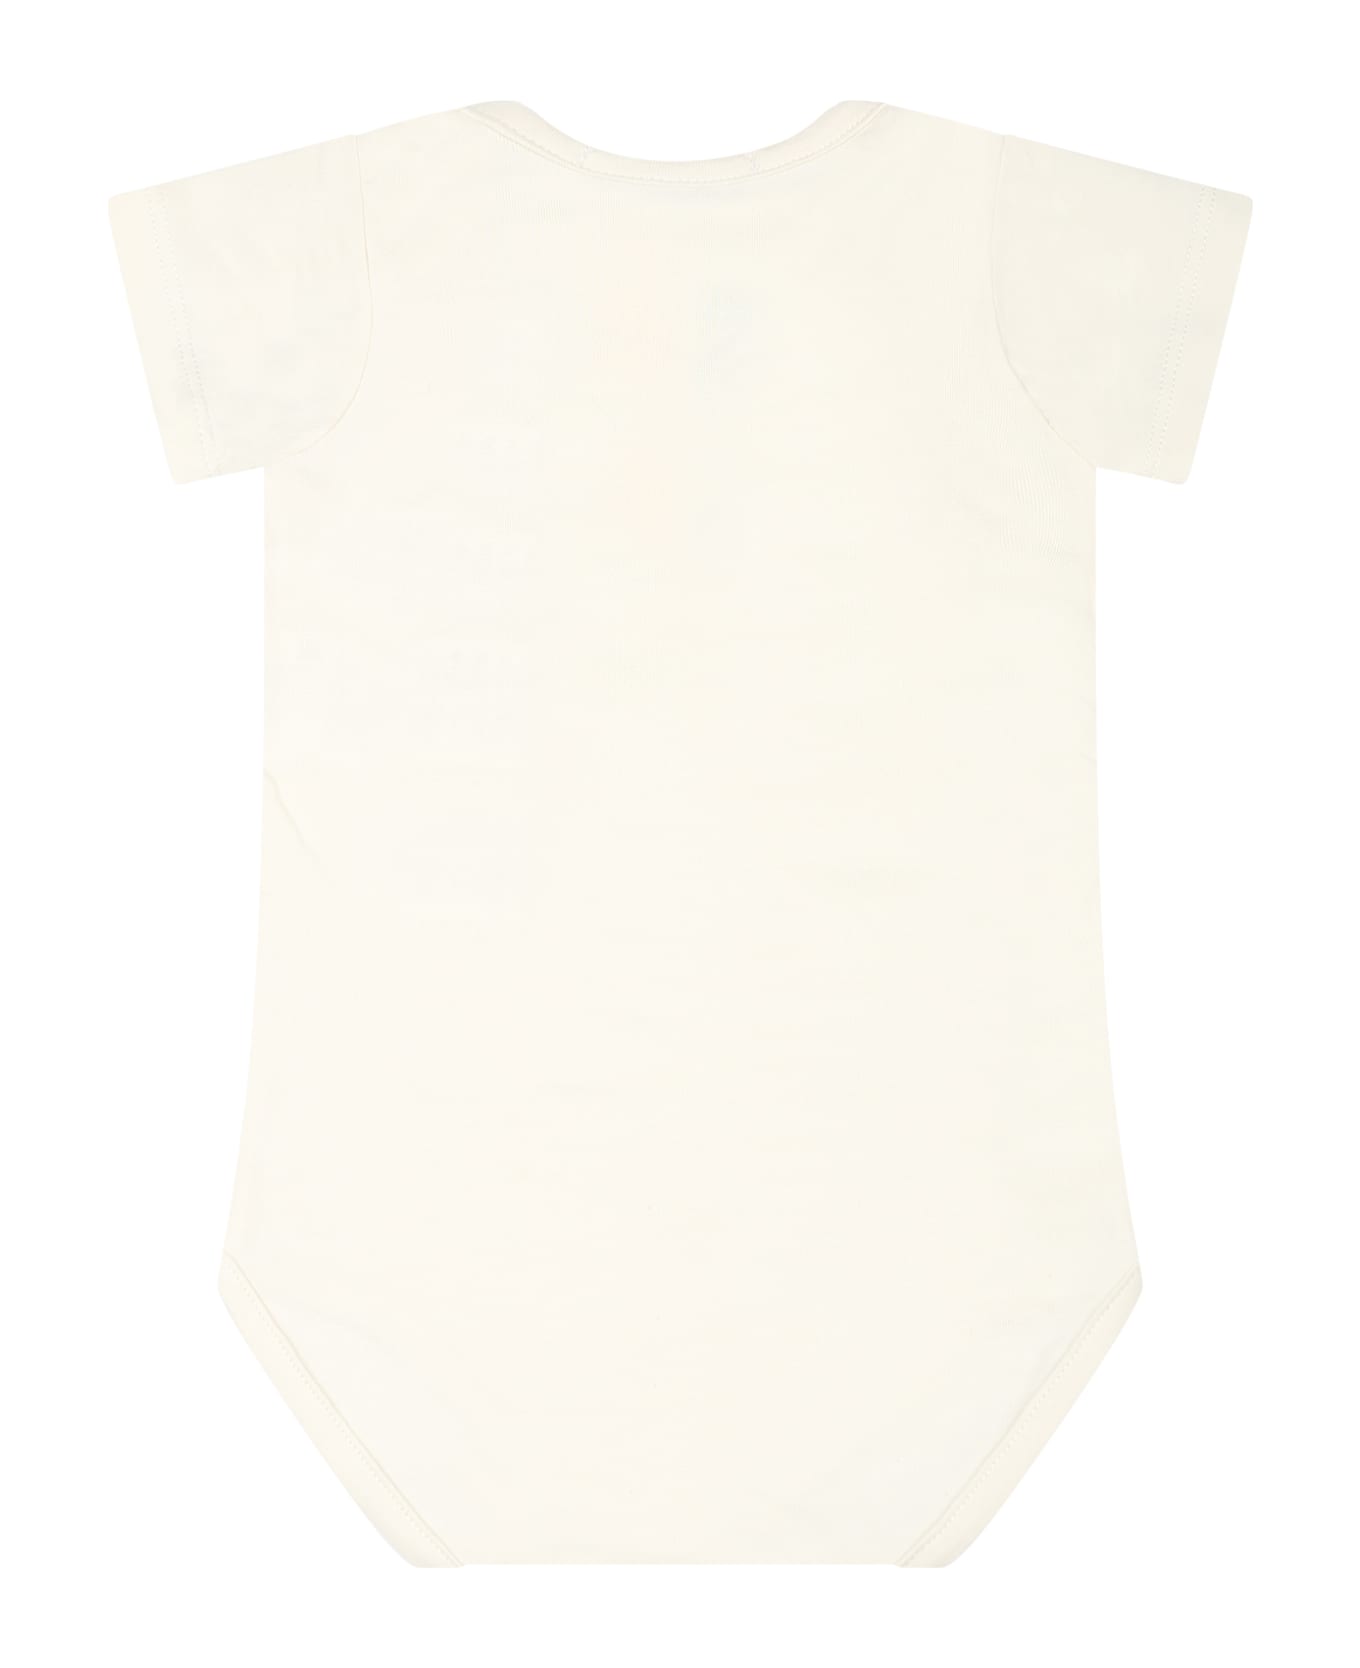 MSGM Ivory Bodysuit Set For Babykids With Logo - Ivory